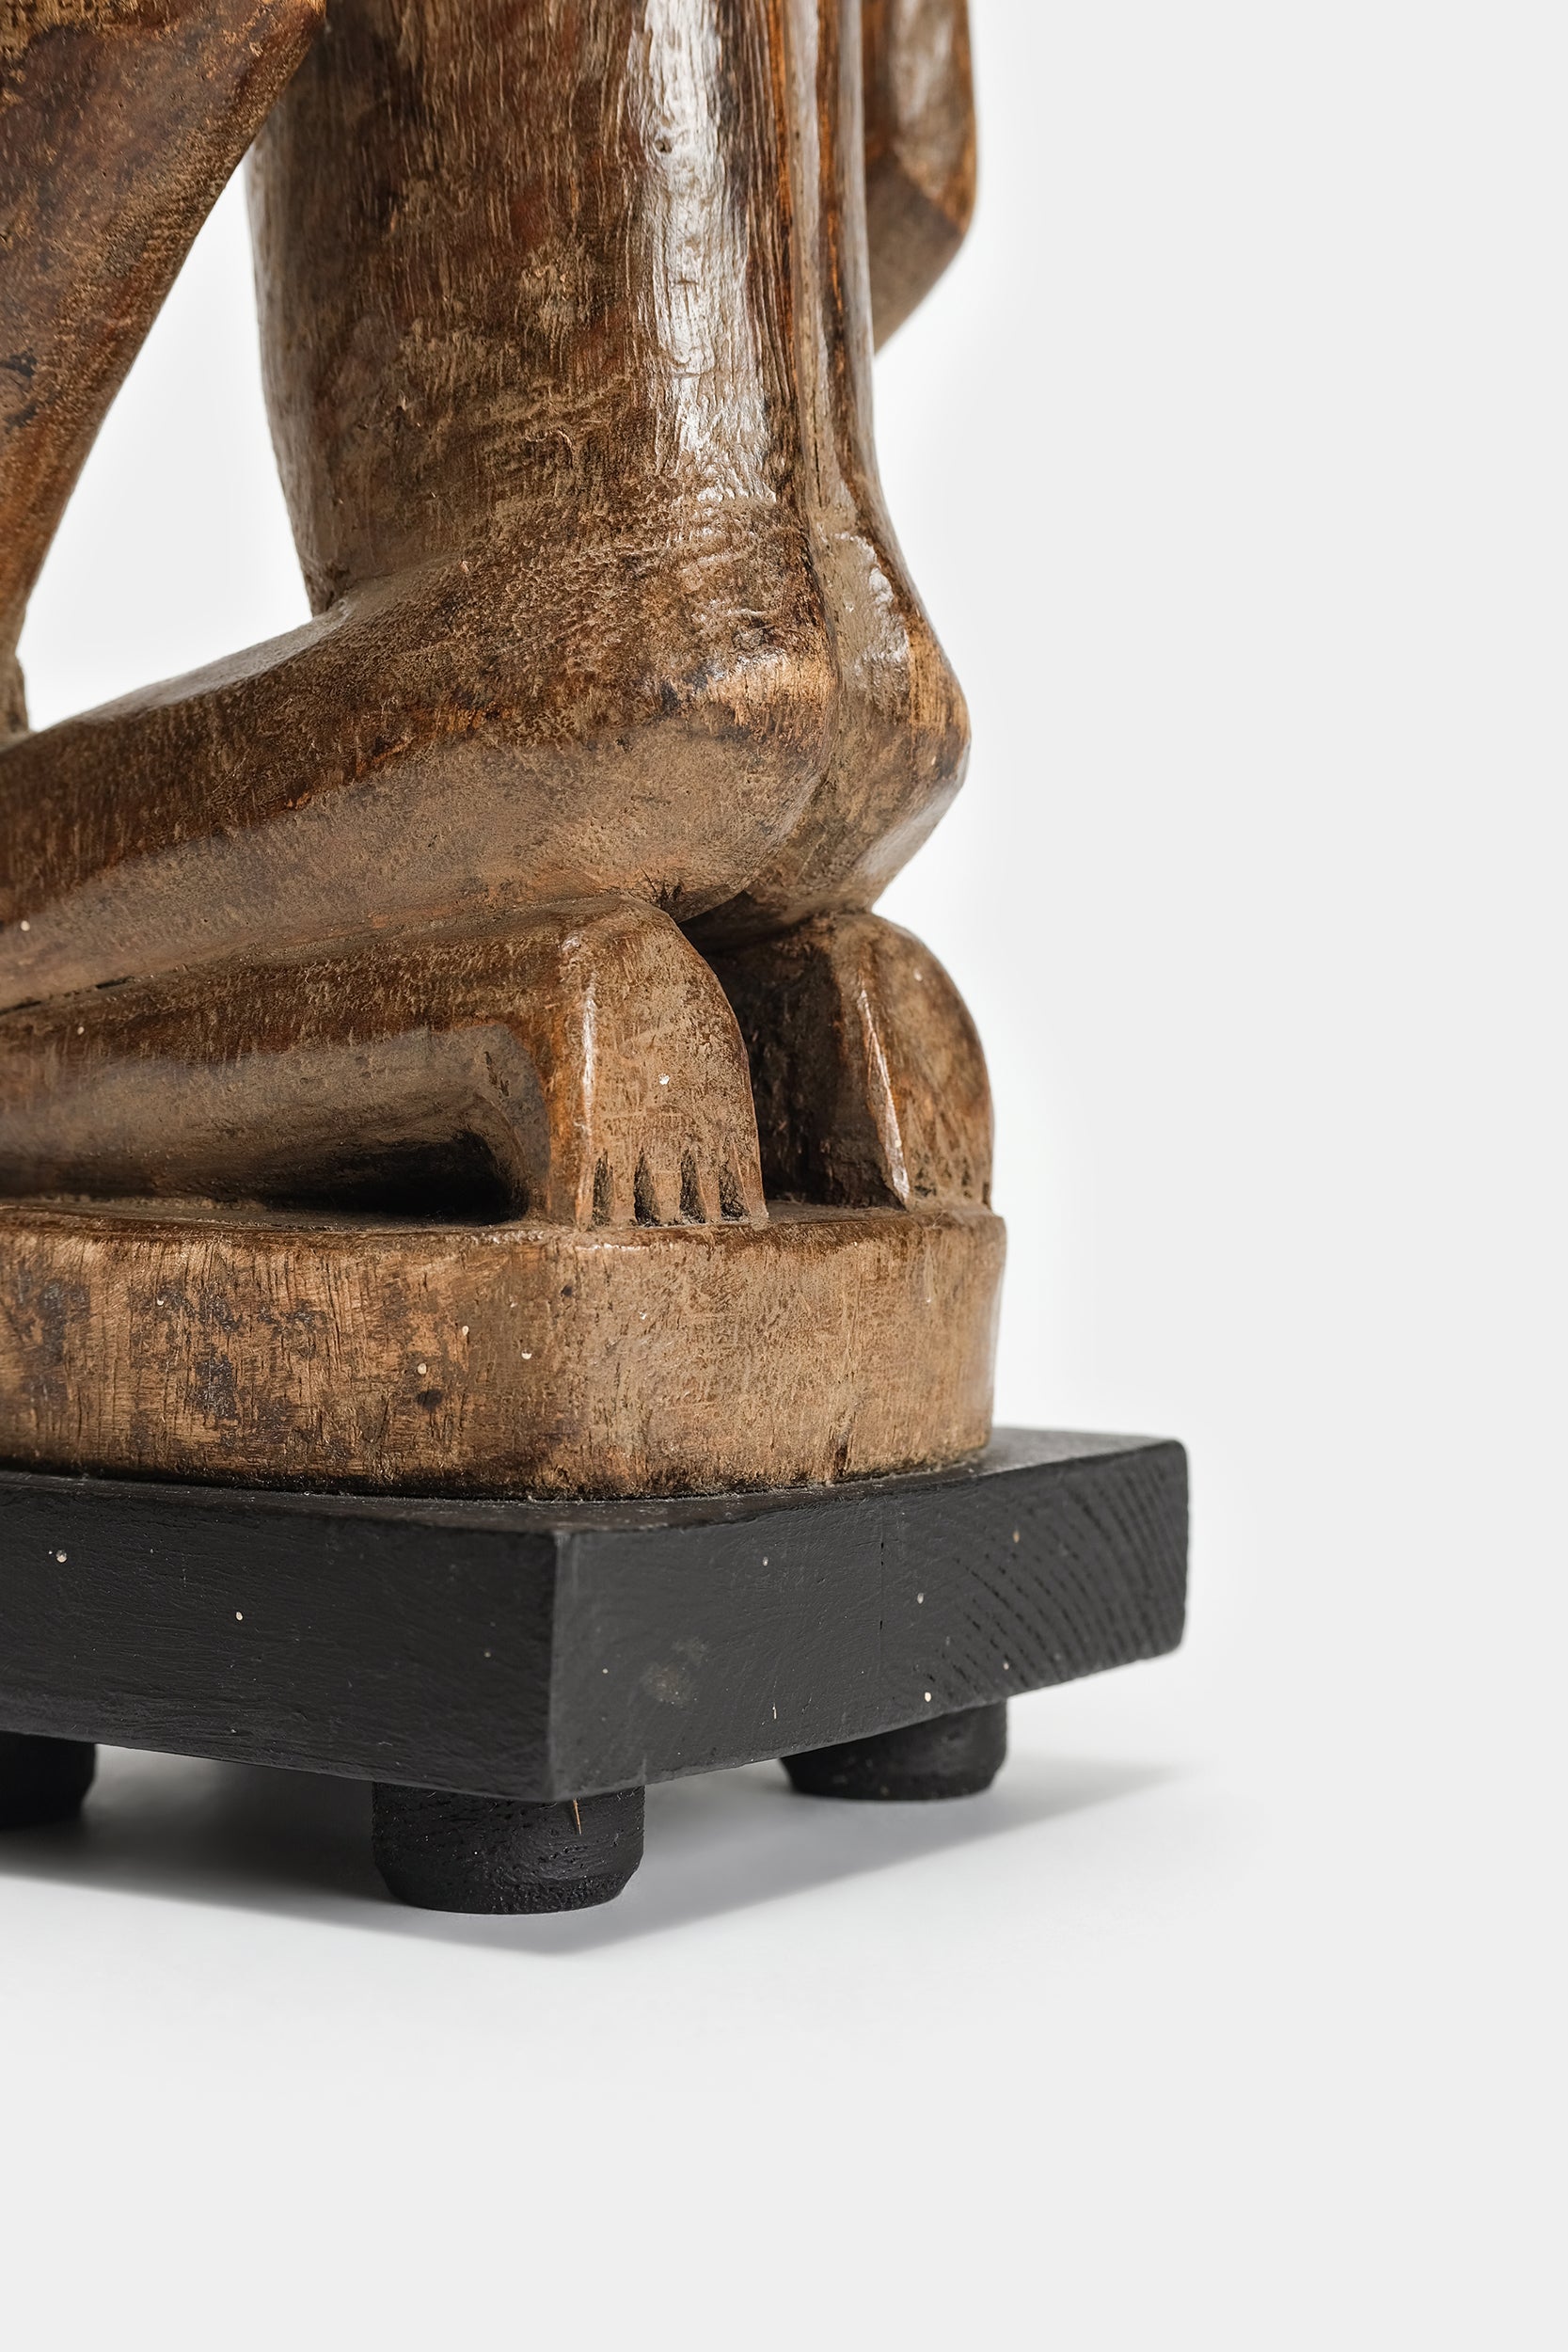 Figur Sitzende Frau, Bakongo Villi, Holz, Kongo, 30er